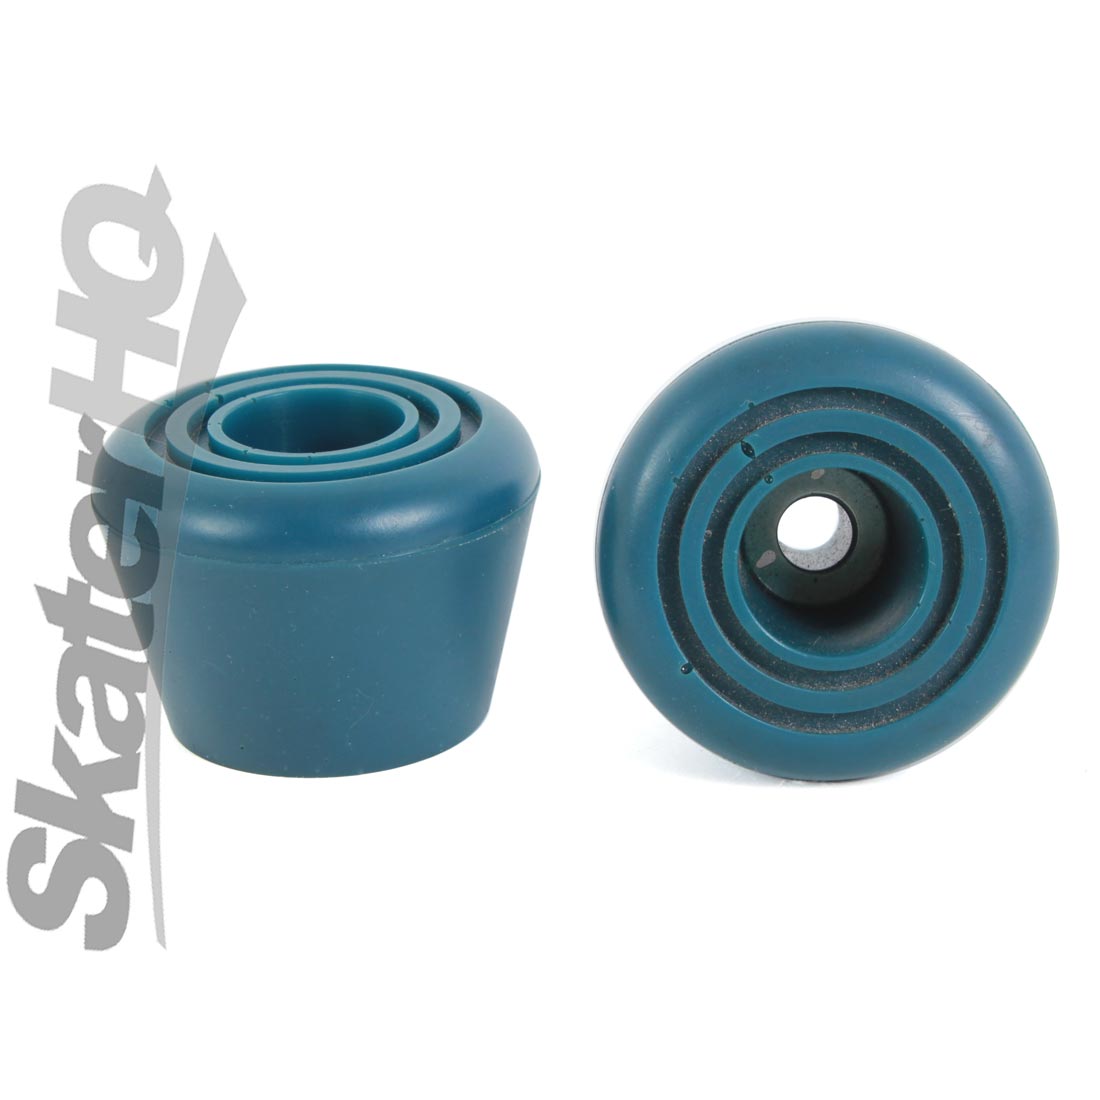 Roller Skate High Bell Stoppers - Blue Roller Skate Hardware and Parts